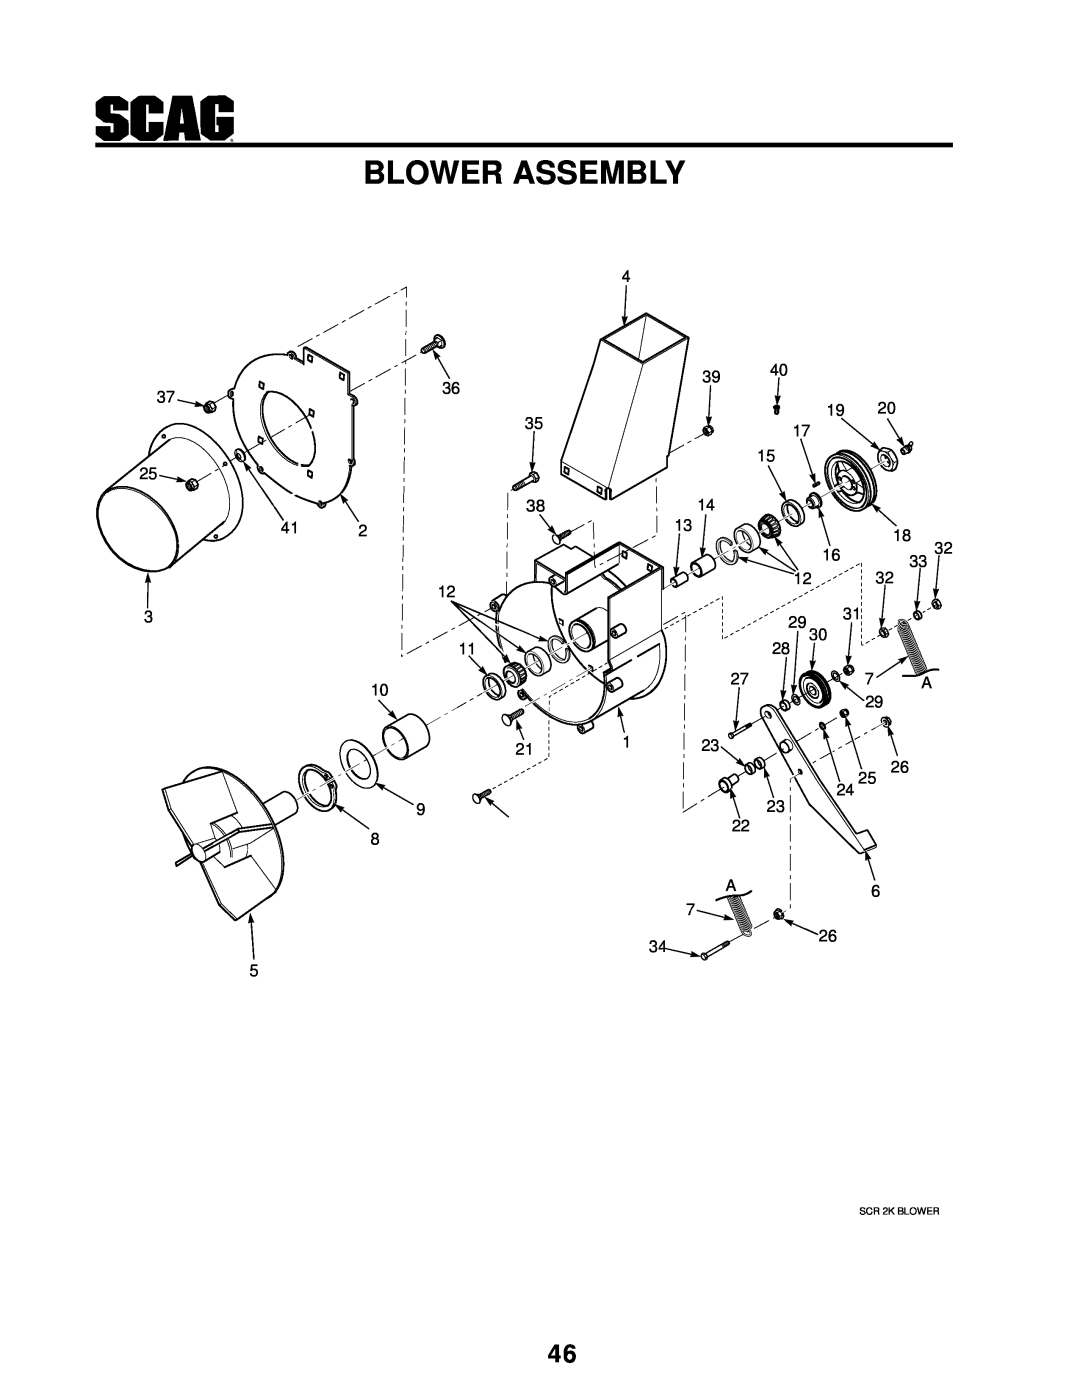 MB QUART manual Blower Assembly, SCR 2K BLOWER 